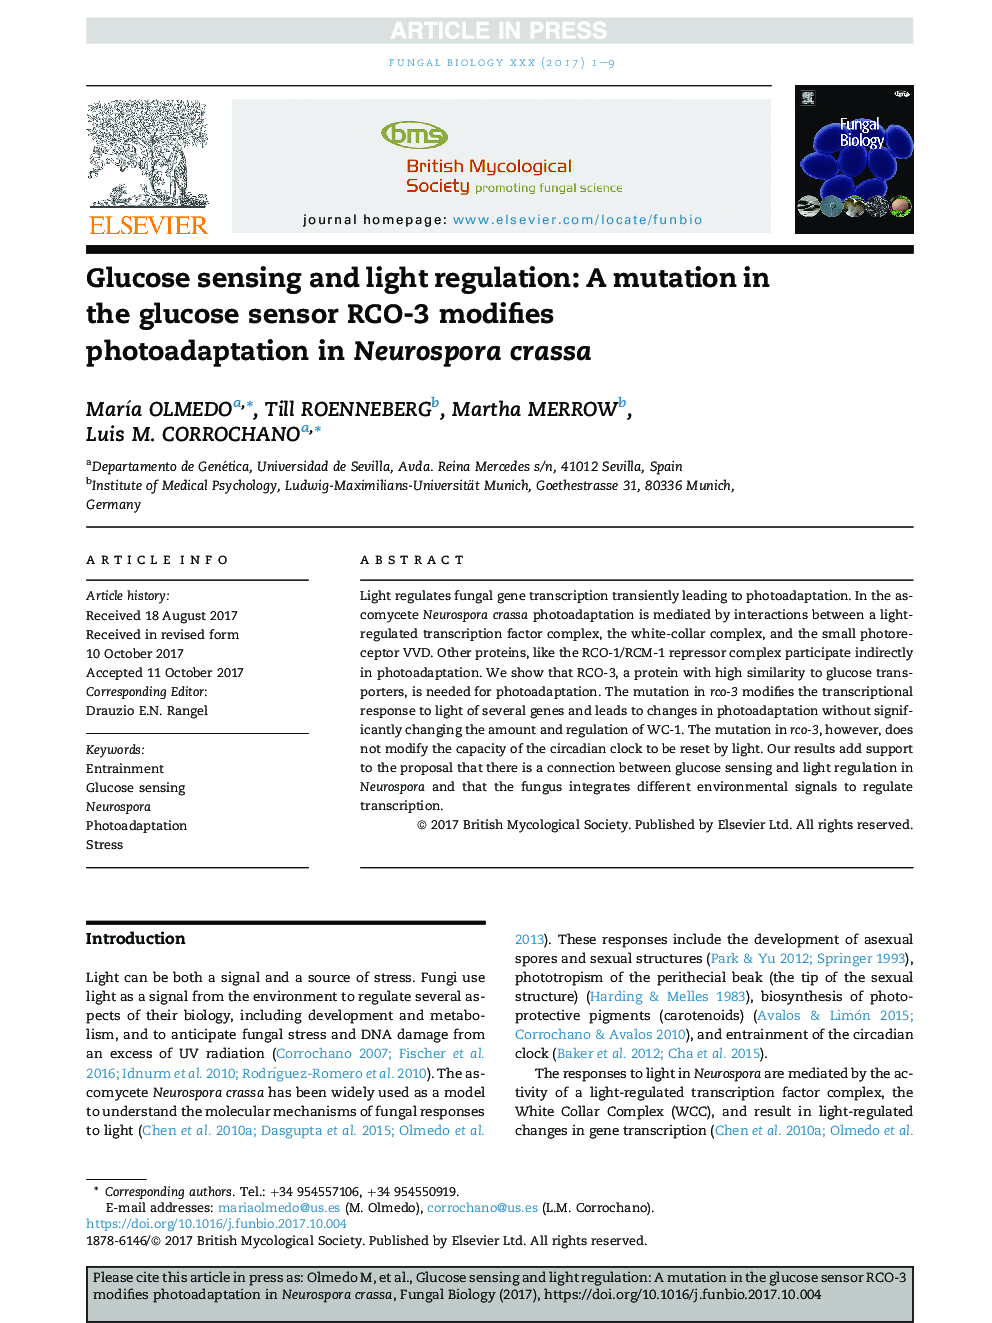 Glucose sensing and light regulation: A mutation in the glucose sensor RCO-3 modifies photoadaptation in Neurospora crassa